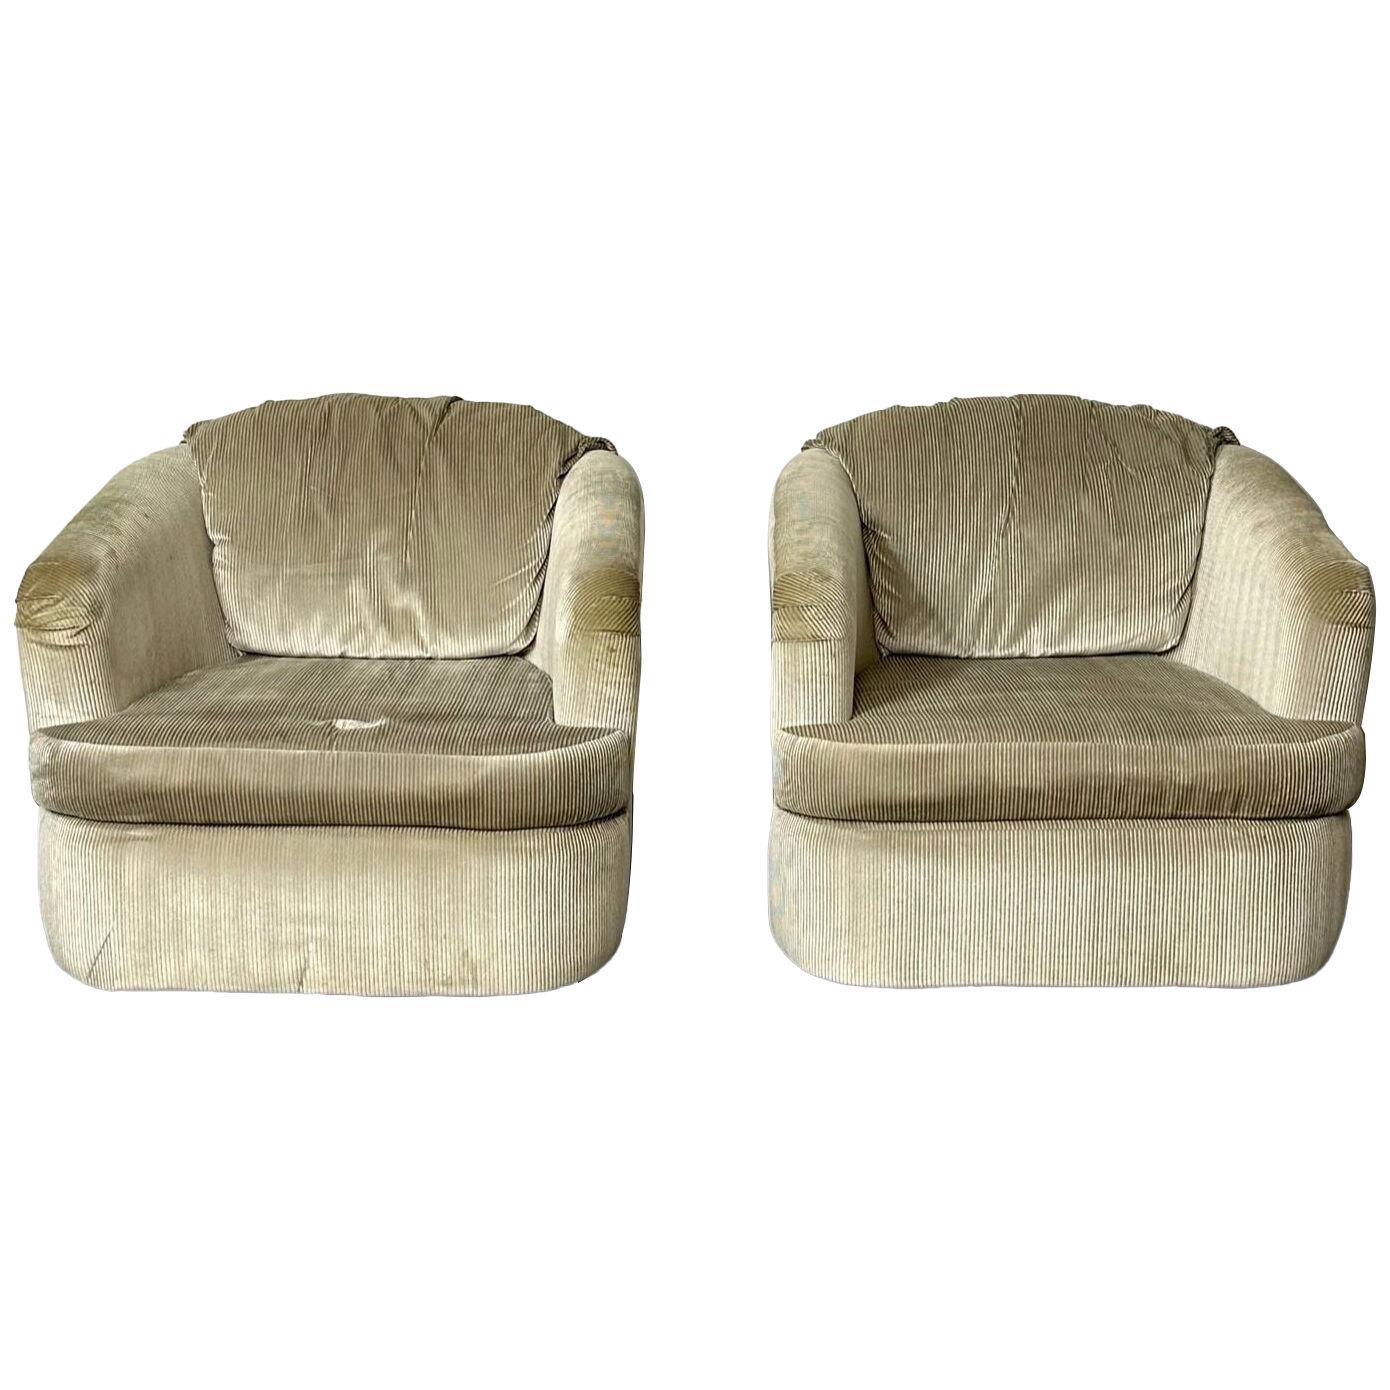 Pair of Mid-Century Modern Swivel Chairs, Milo Baughman Style, Sturdy